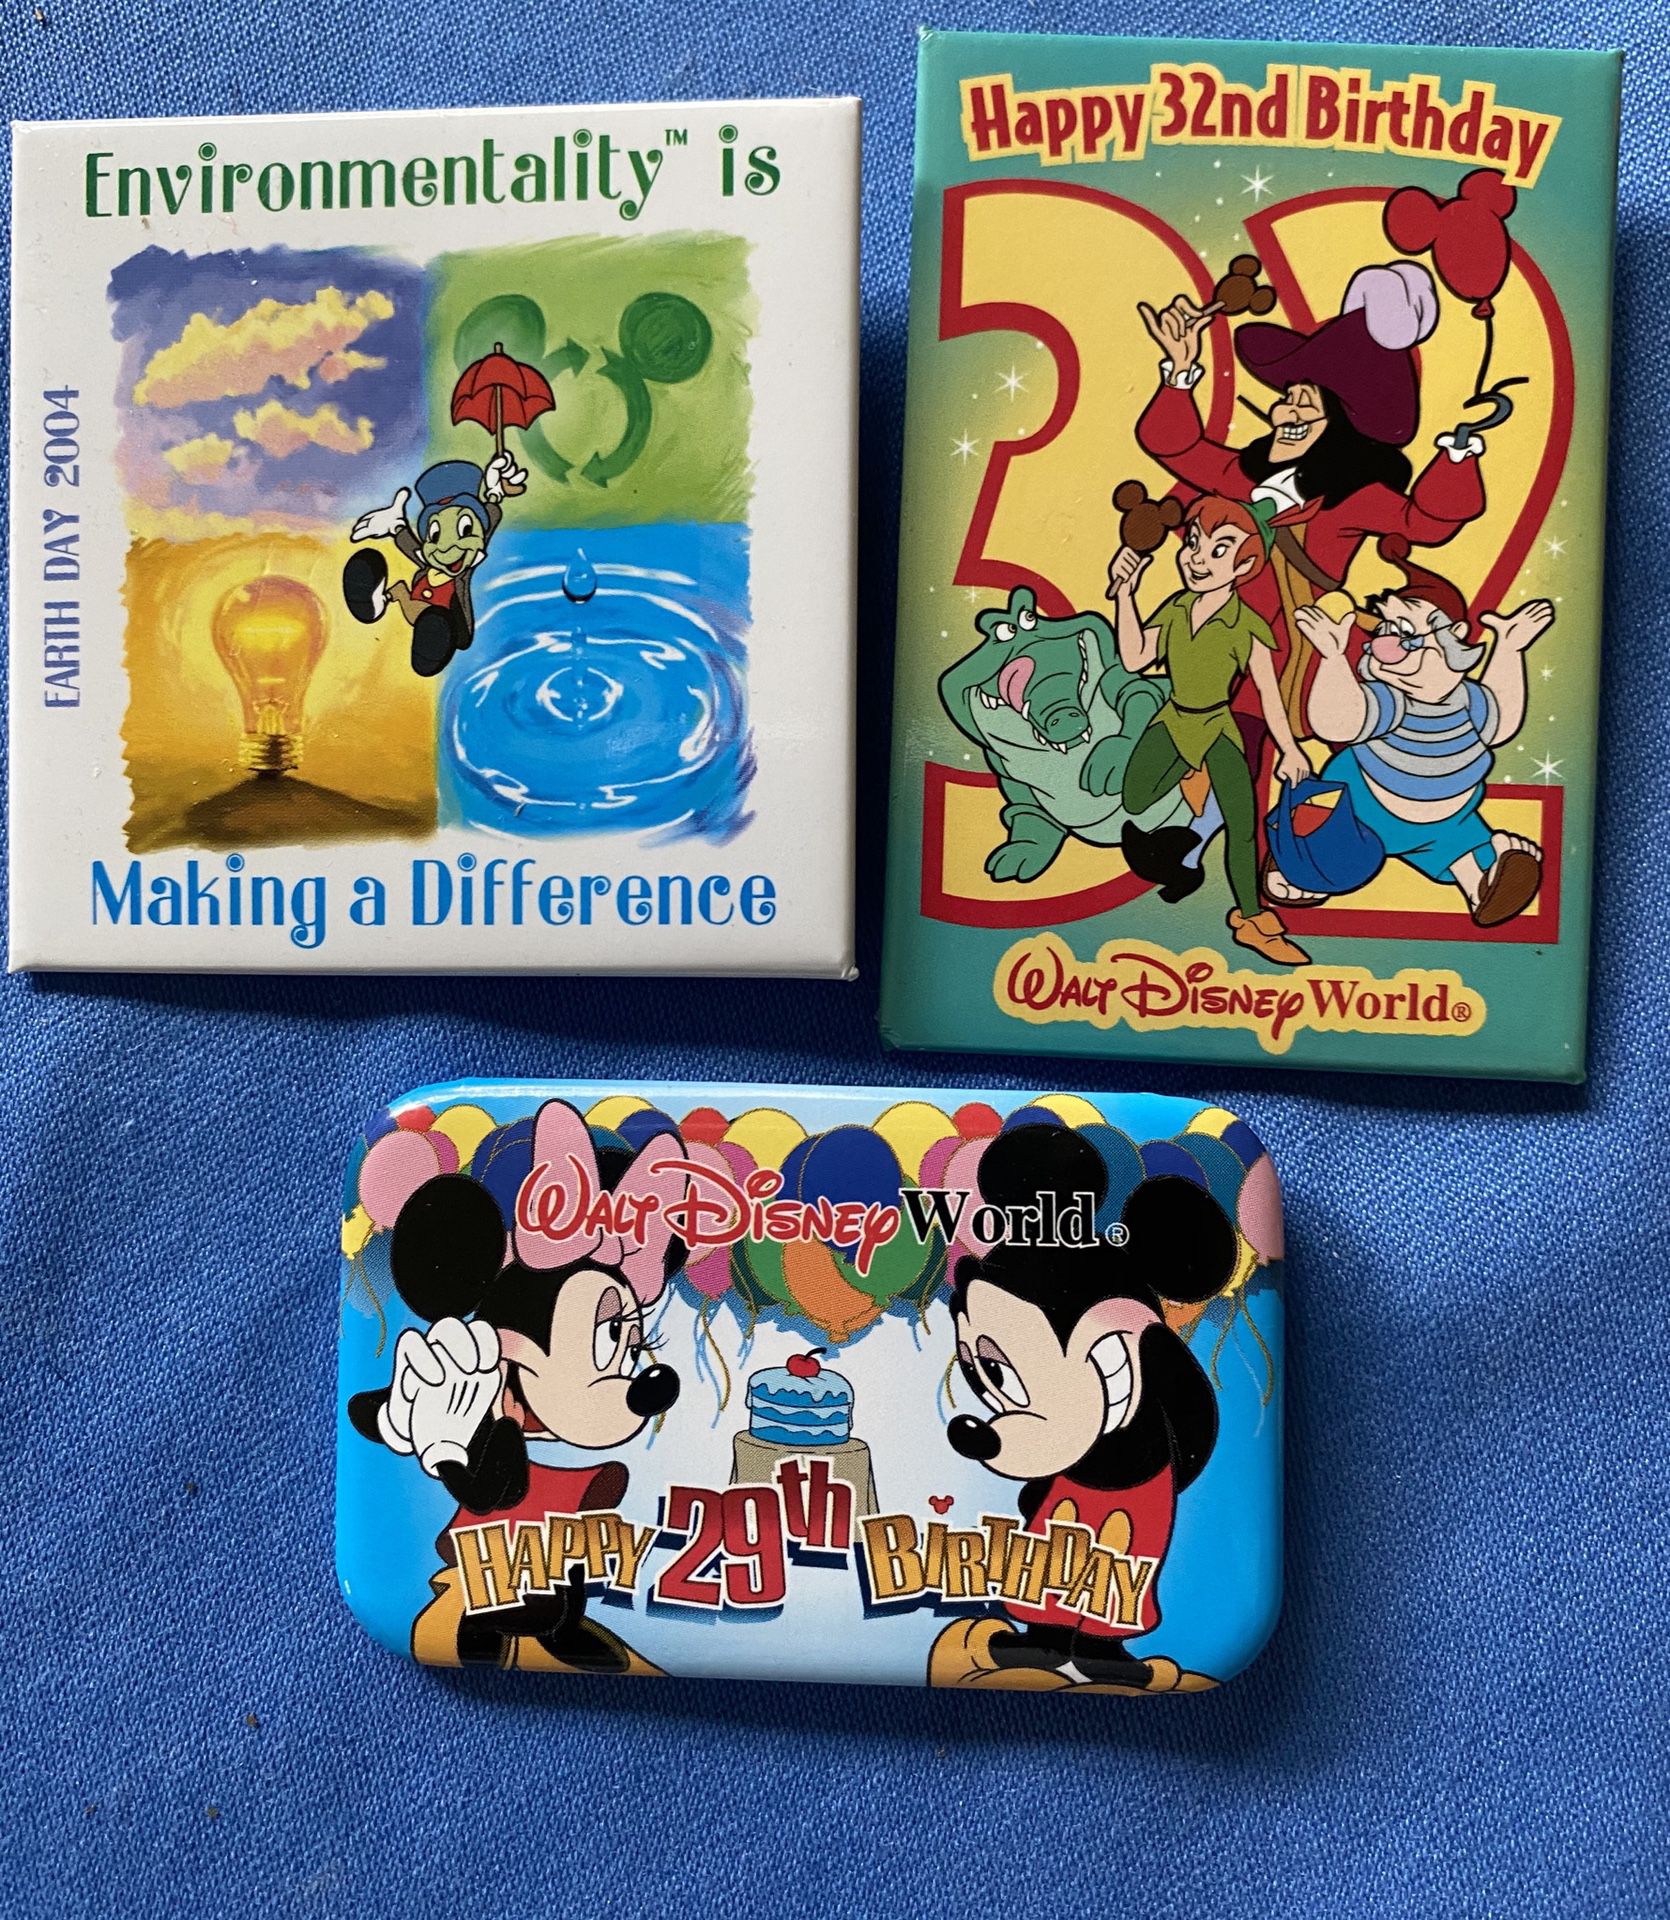 WDW (Walt Disney World) Collectors Pins